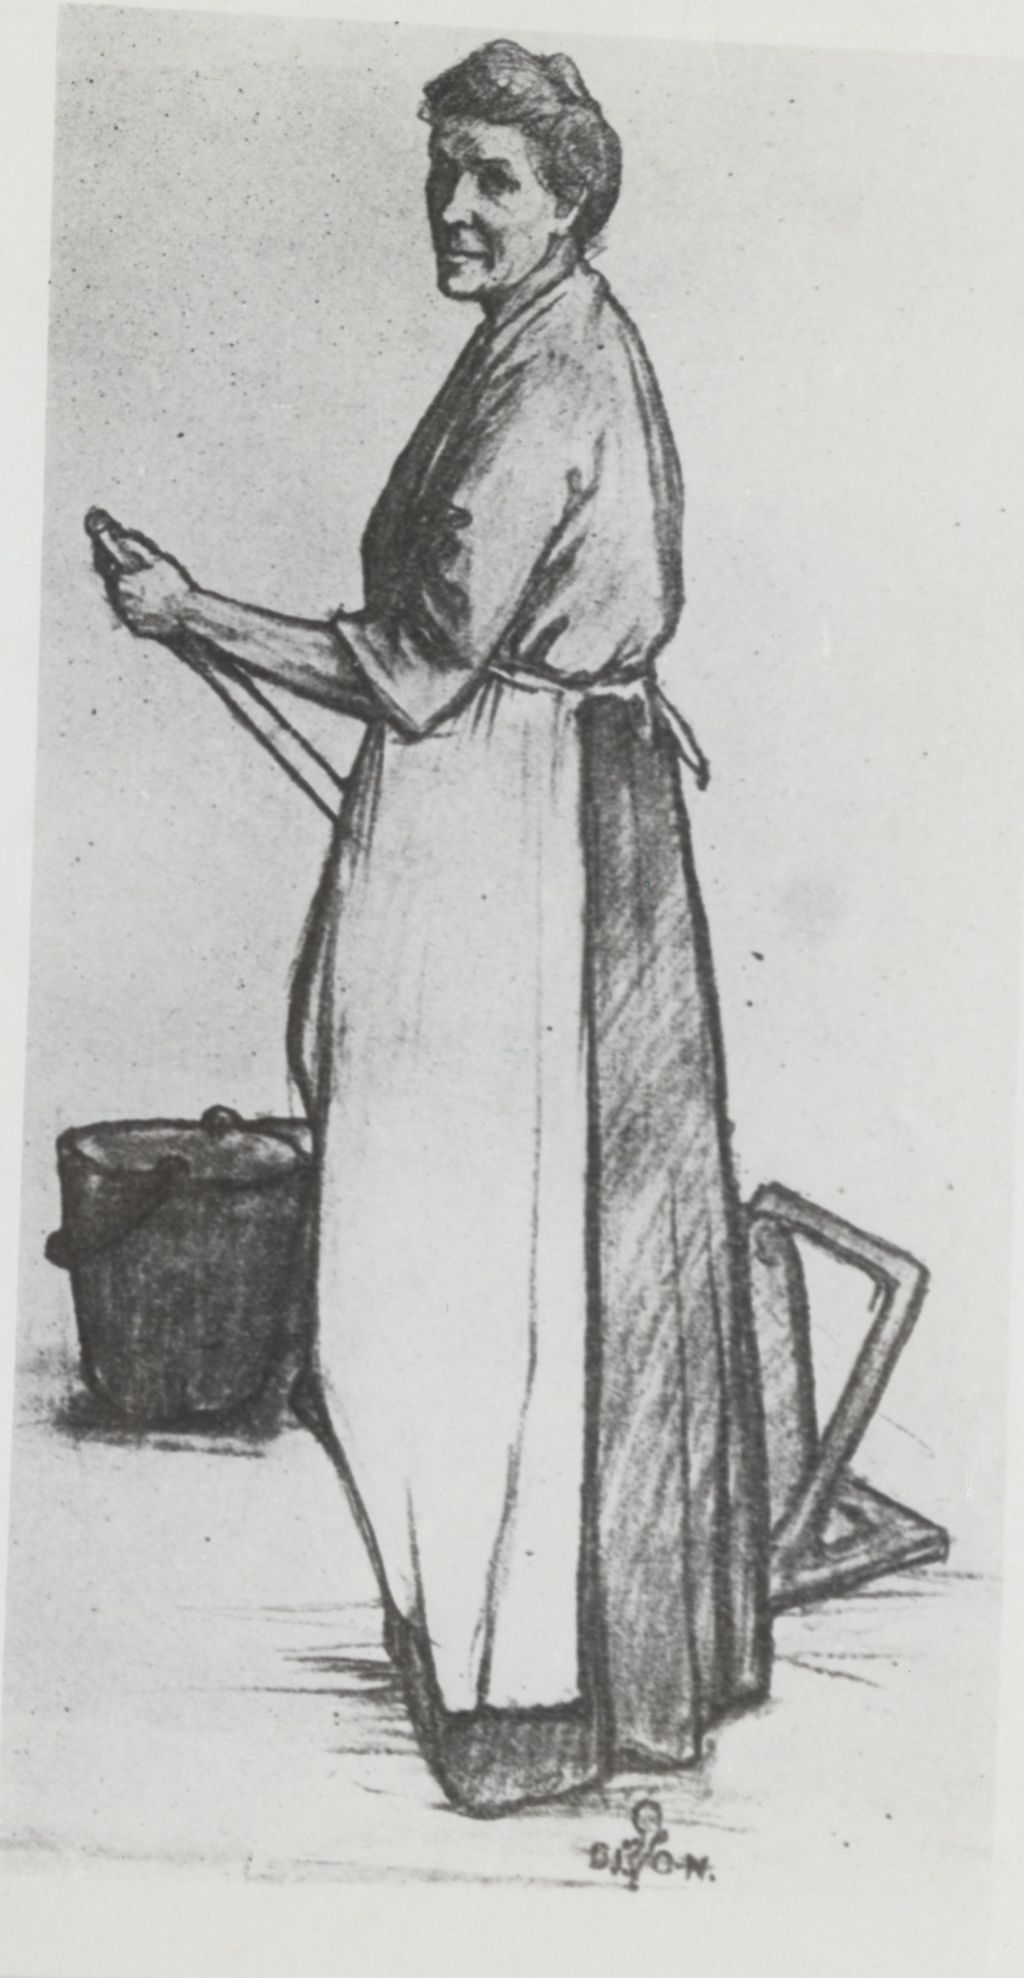 Miniature of "Mrs. Sweeney, the scrub woman" drawing